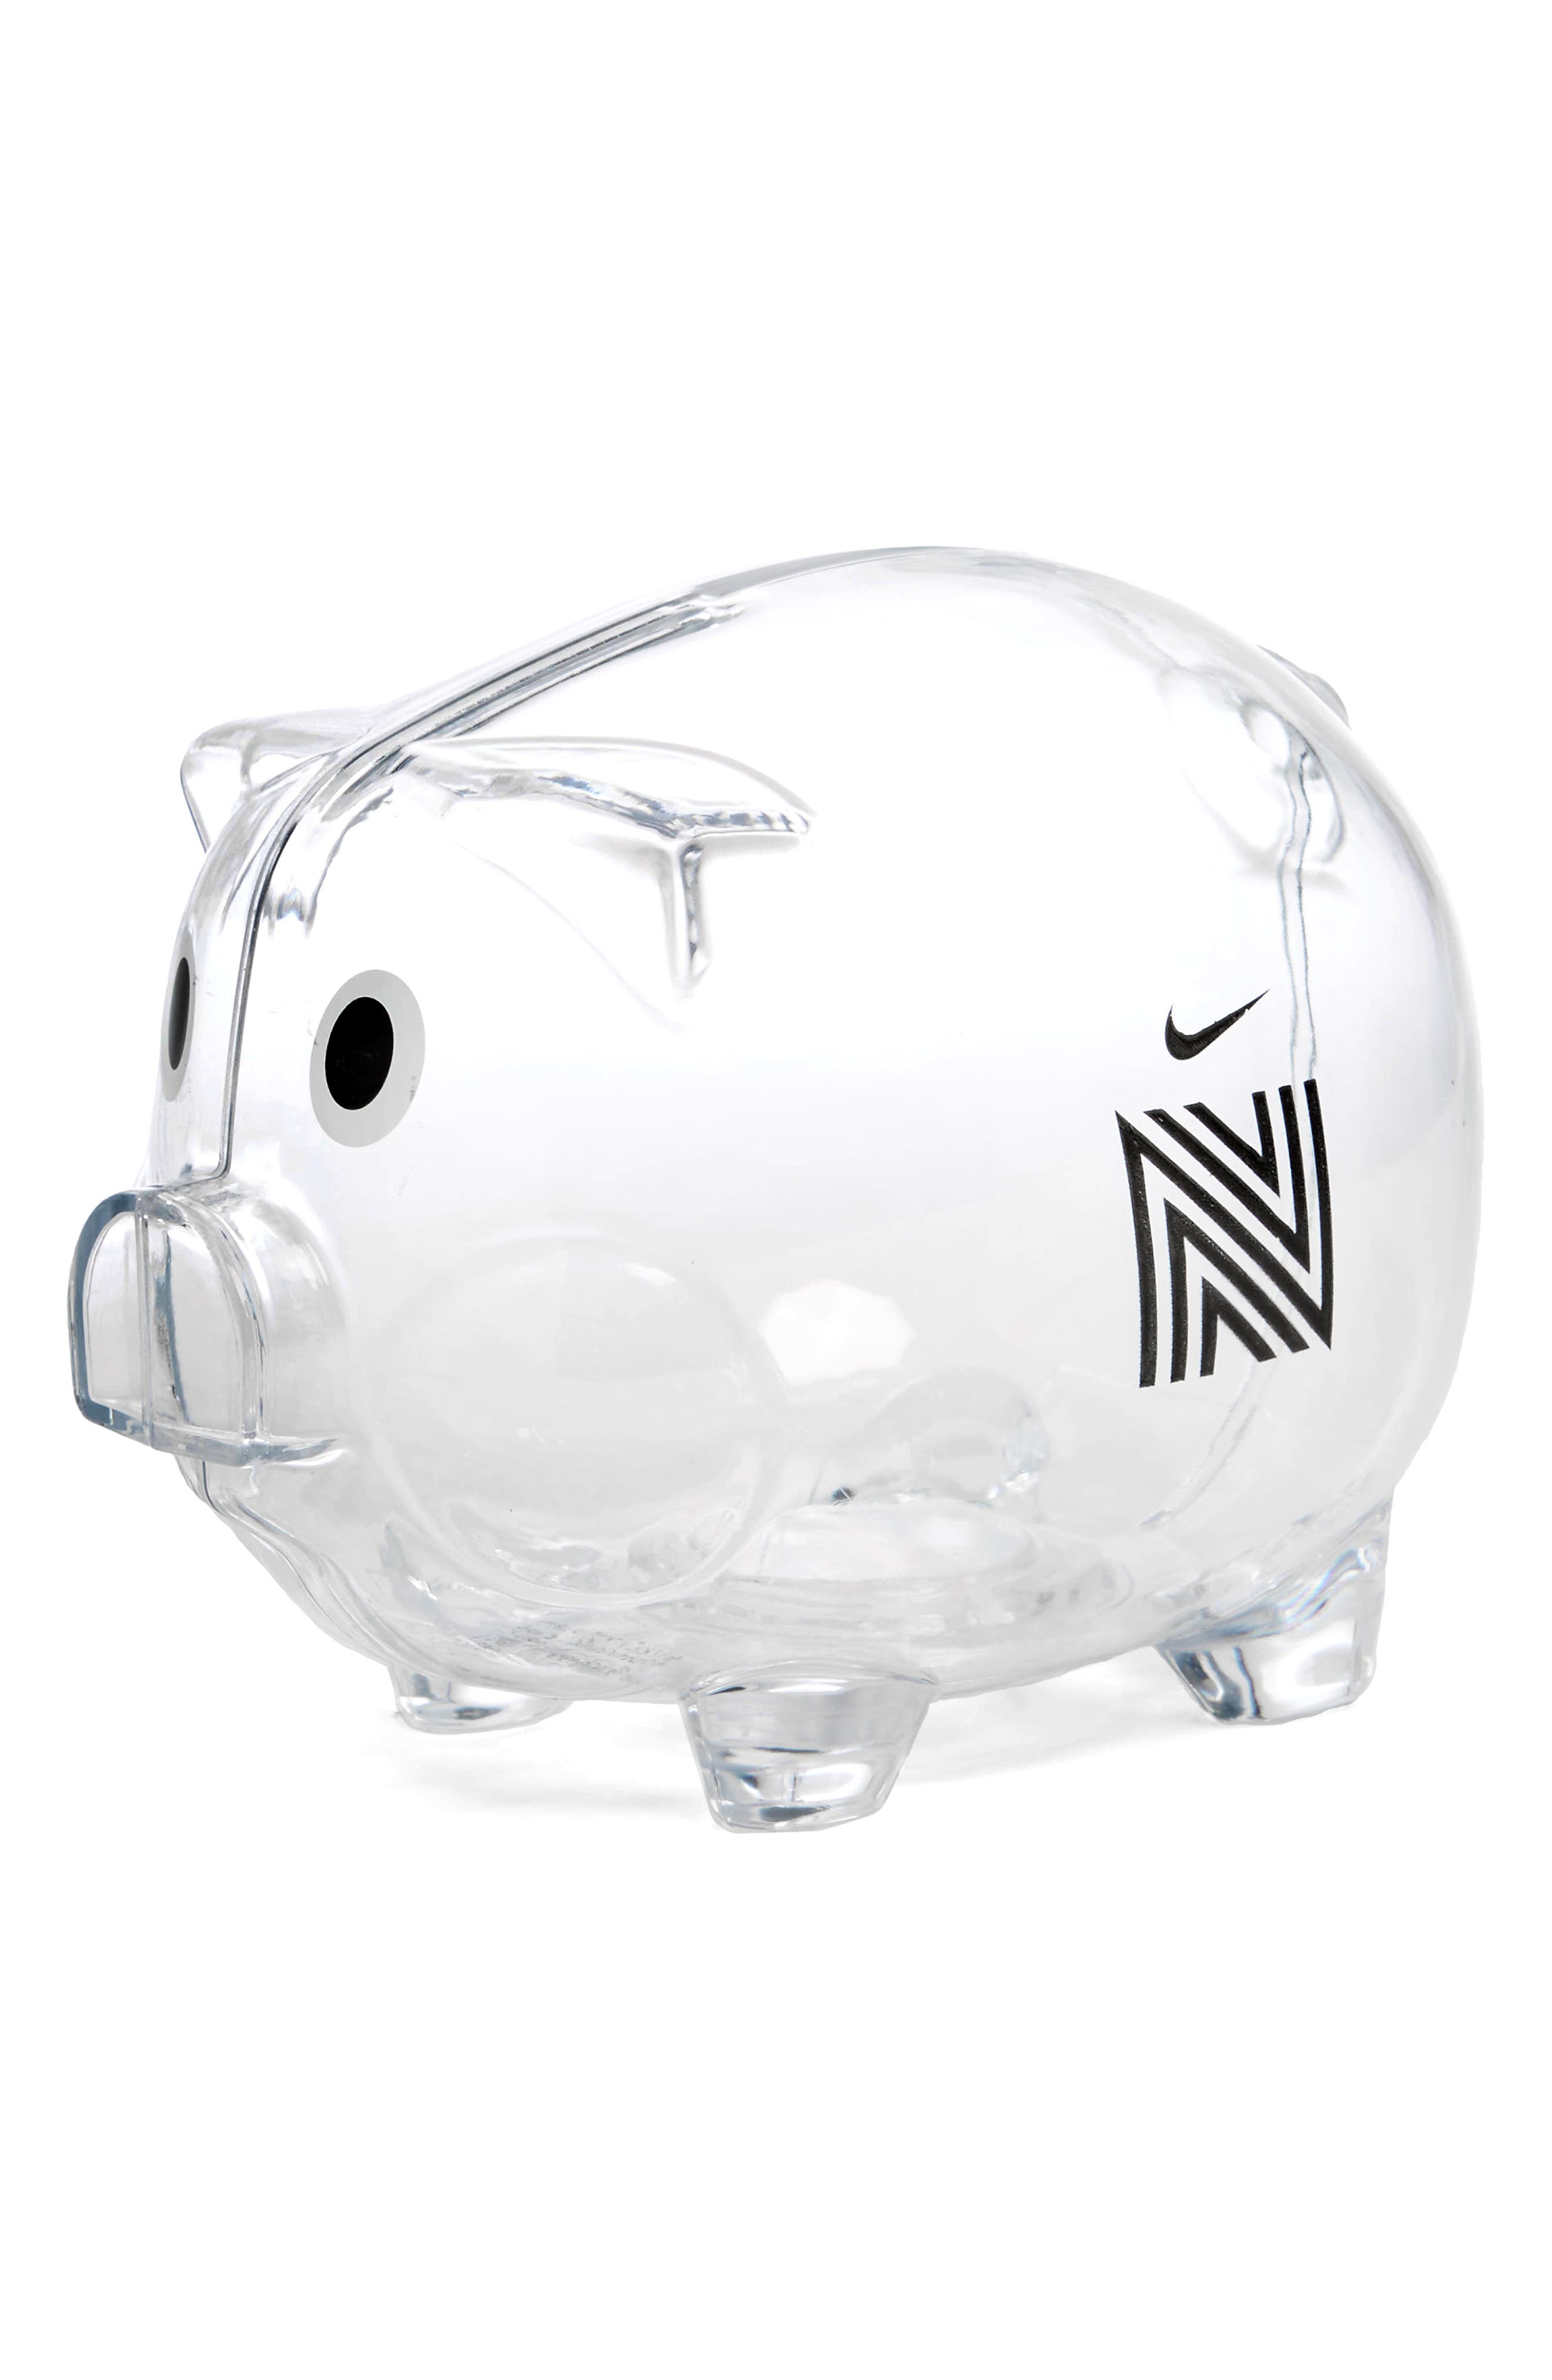 Nordstrom x Nike Translucent Piggy Bank 